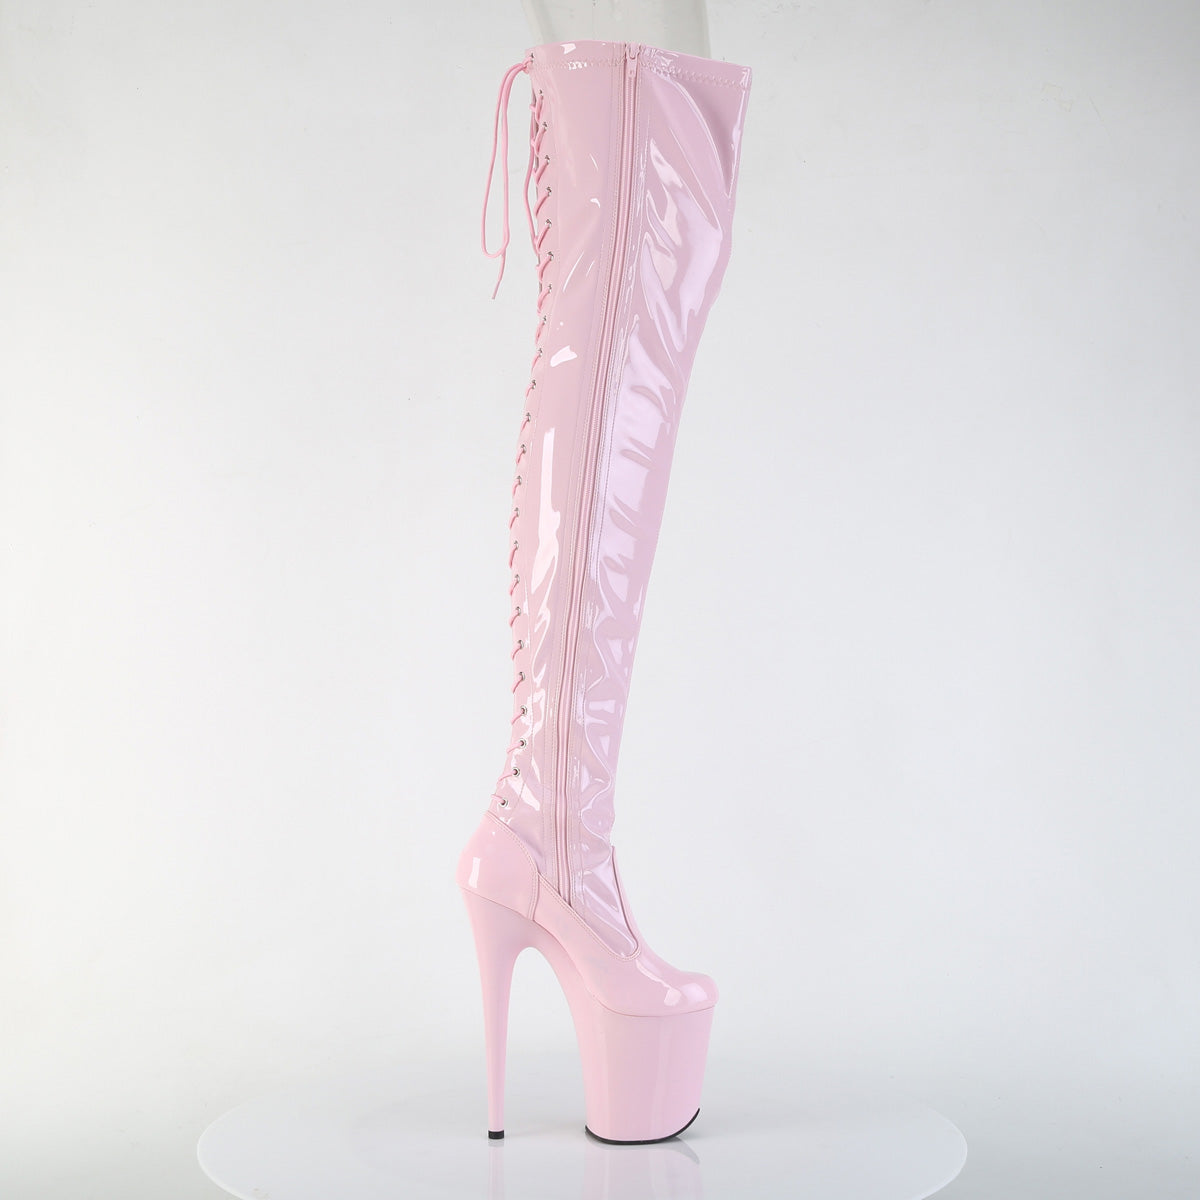 8 Inch Heel FLAMINGO-3850 Baby Pink Patent